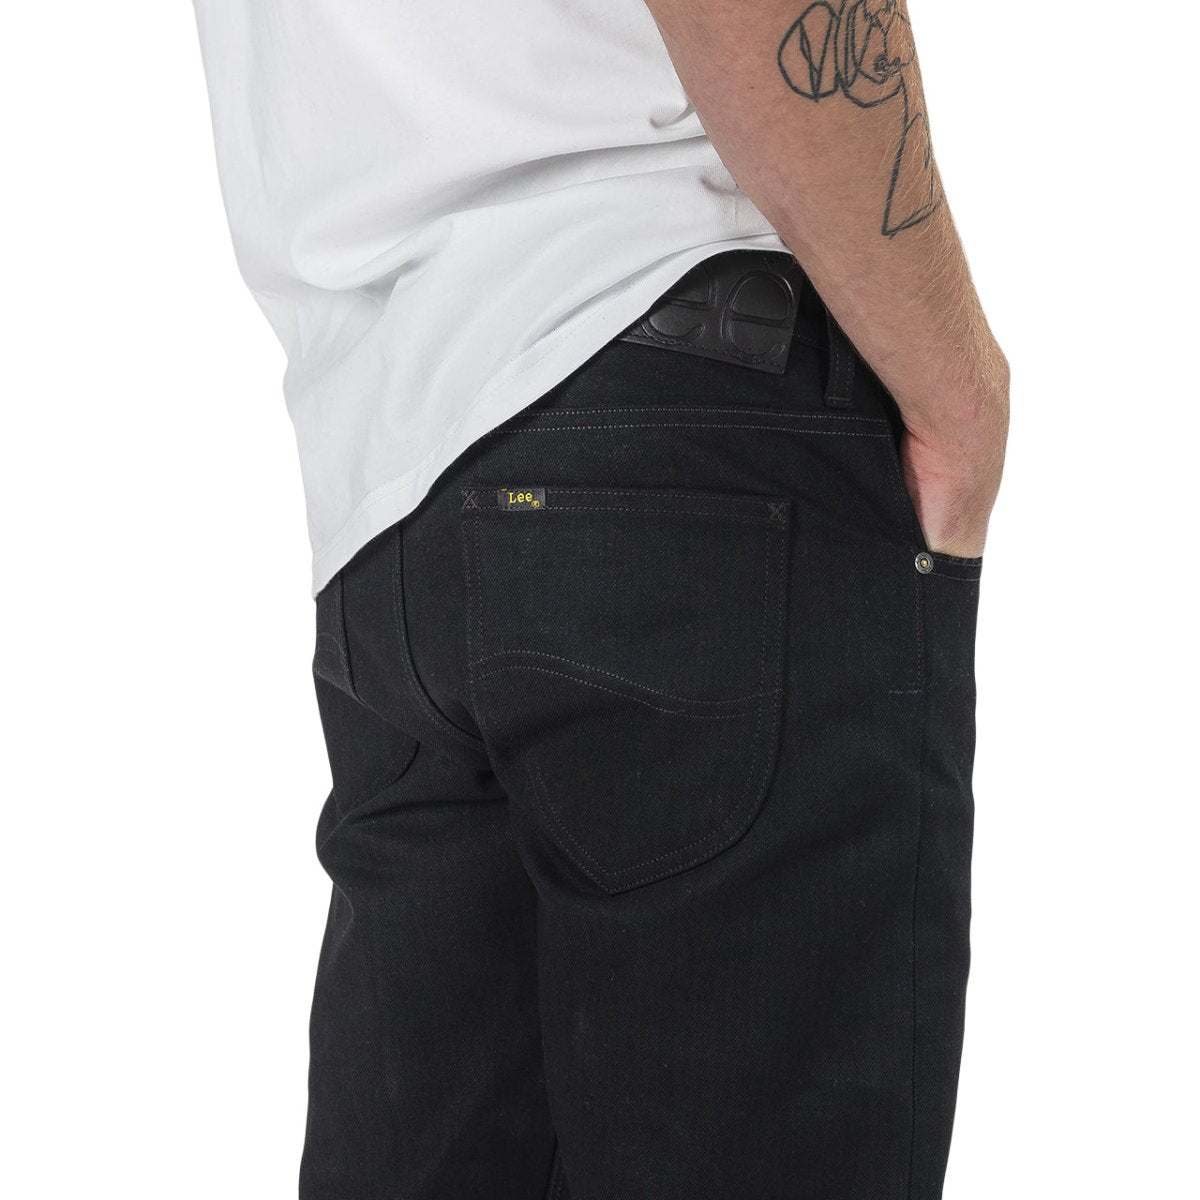 Lee 101 S Dry Regular Jeans (Schwarz)  - Allike Store